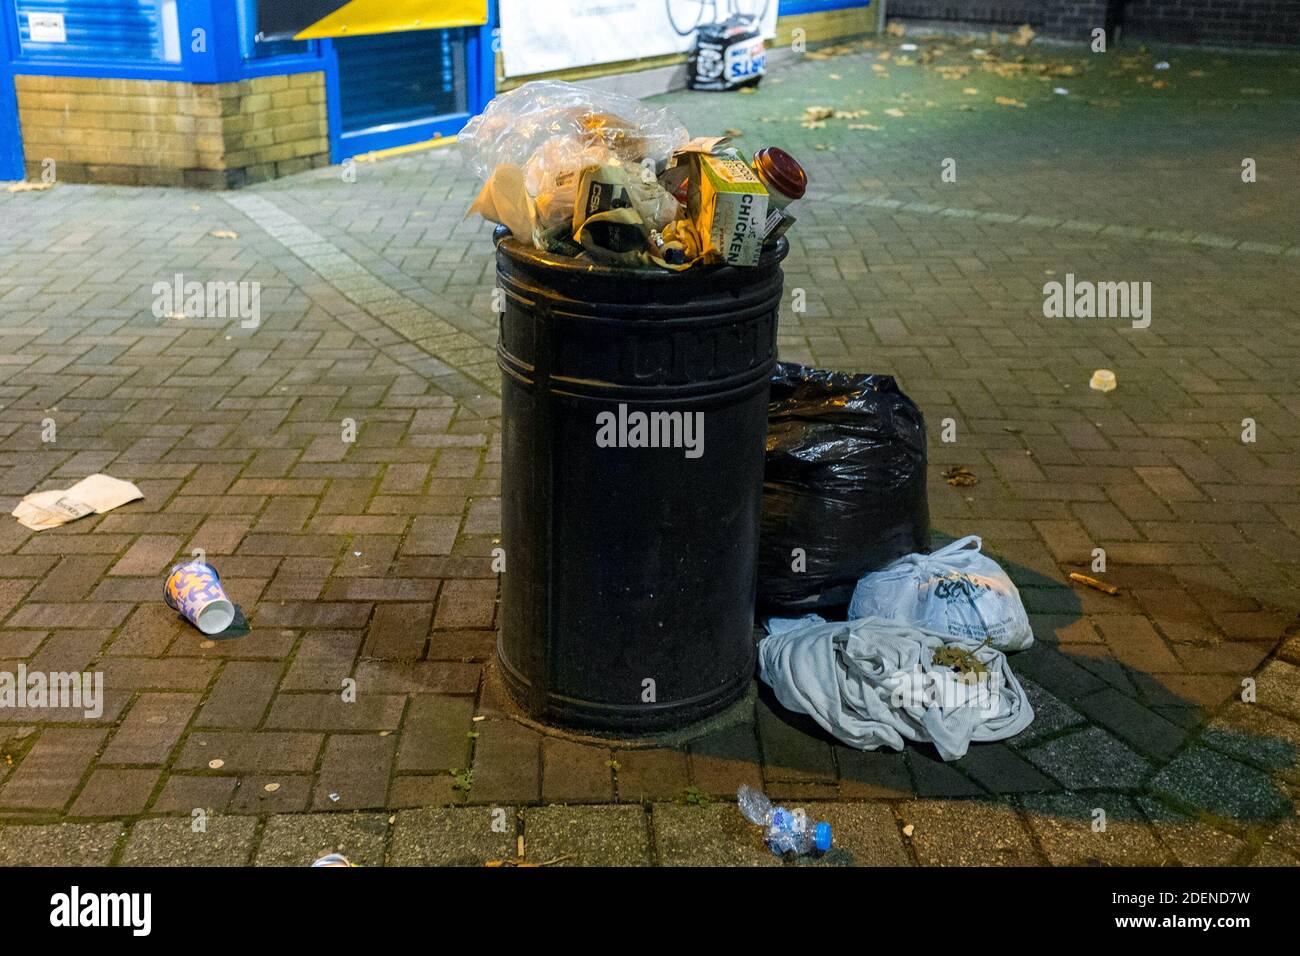 Overflow of rubbish from a bin in Lambeth, London, UK Stock Photo